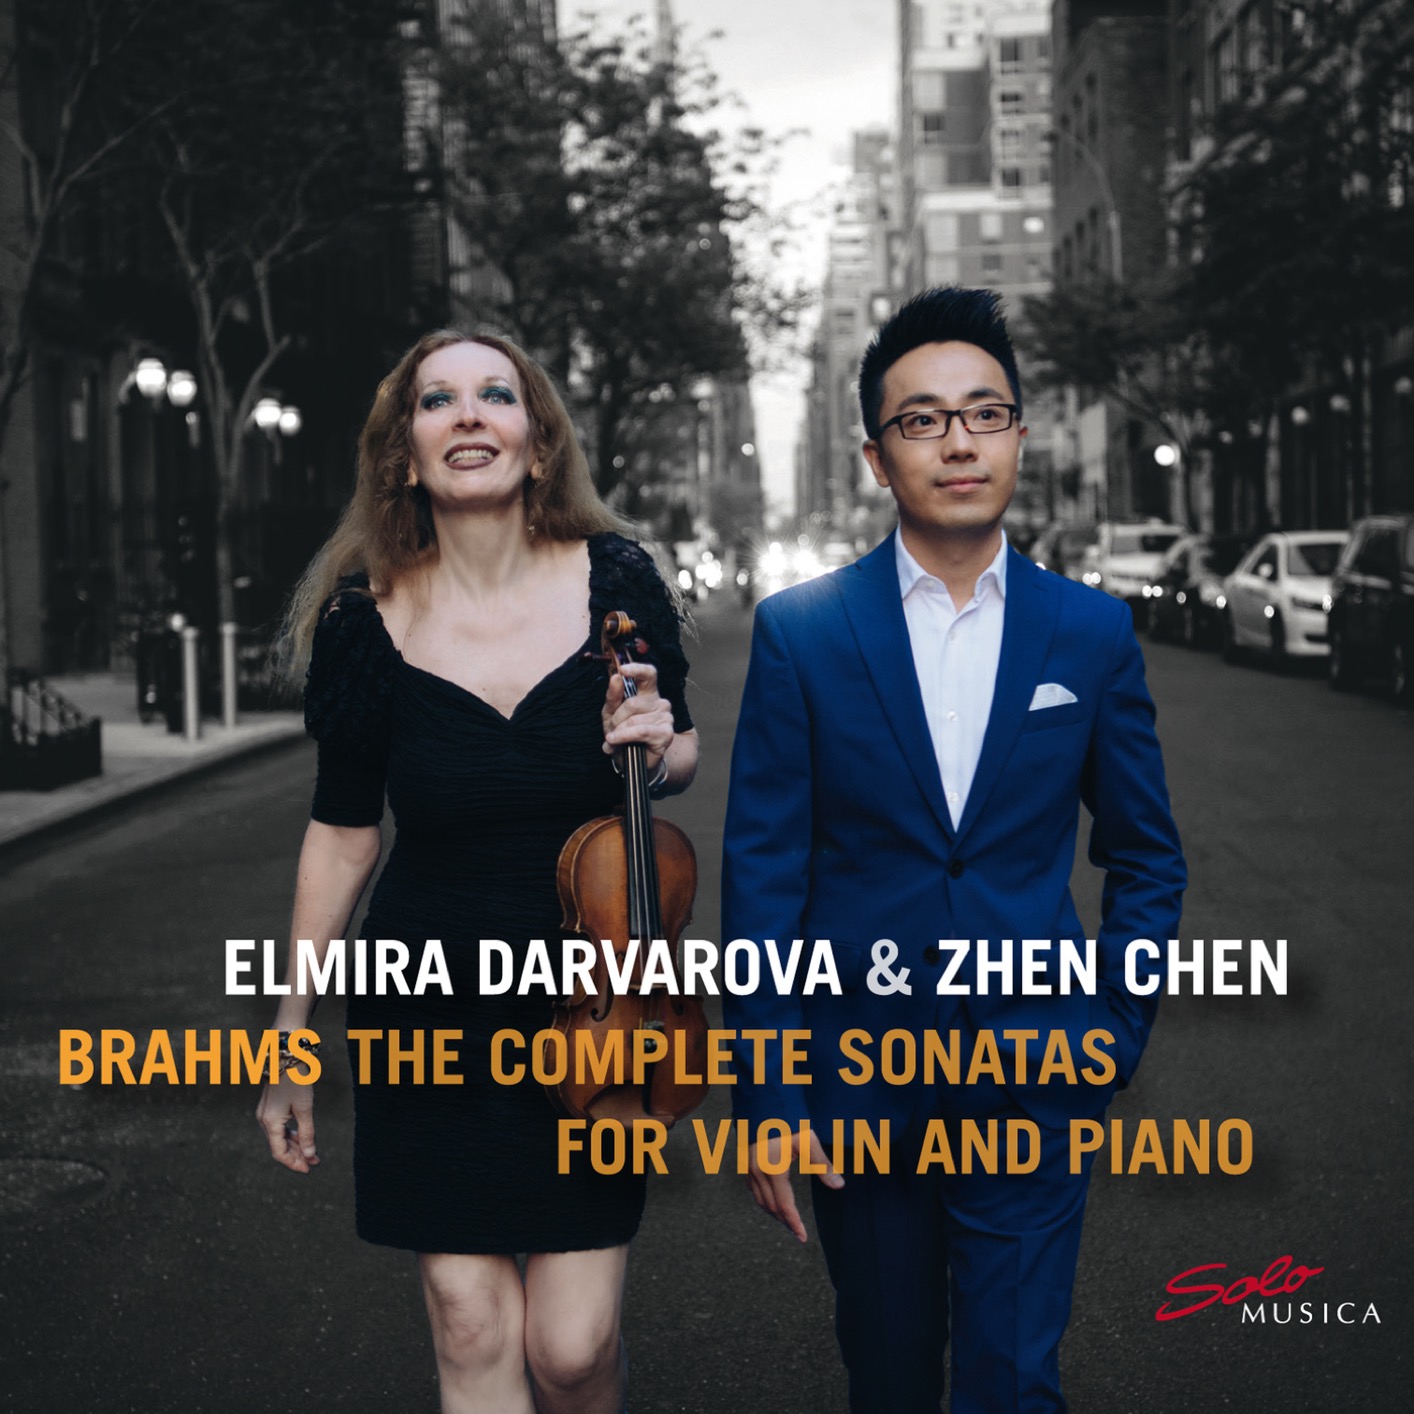 Elmira Darvarova & Zhen Chen - Brahms: The Complete Sonatas for Violin and Piano (2019) [FLAC 24bit/96kHz]